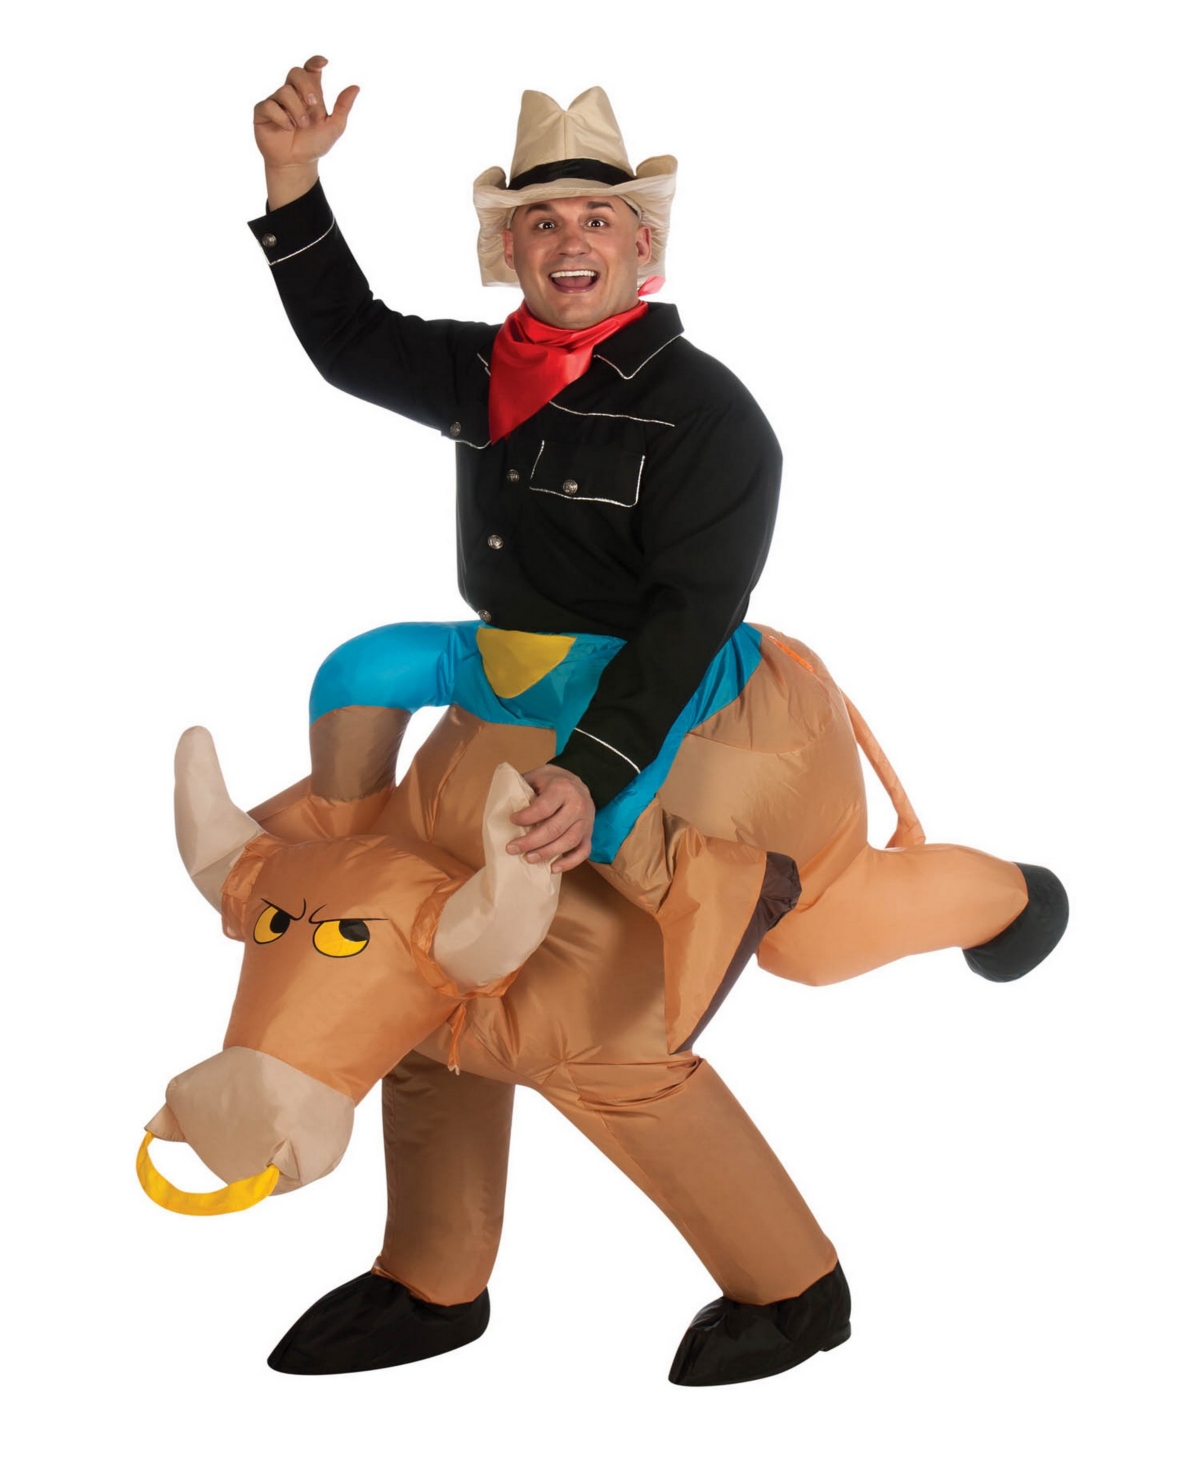 BuySeason Men's Infl Bull Rider Costume - Black